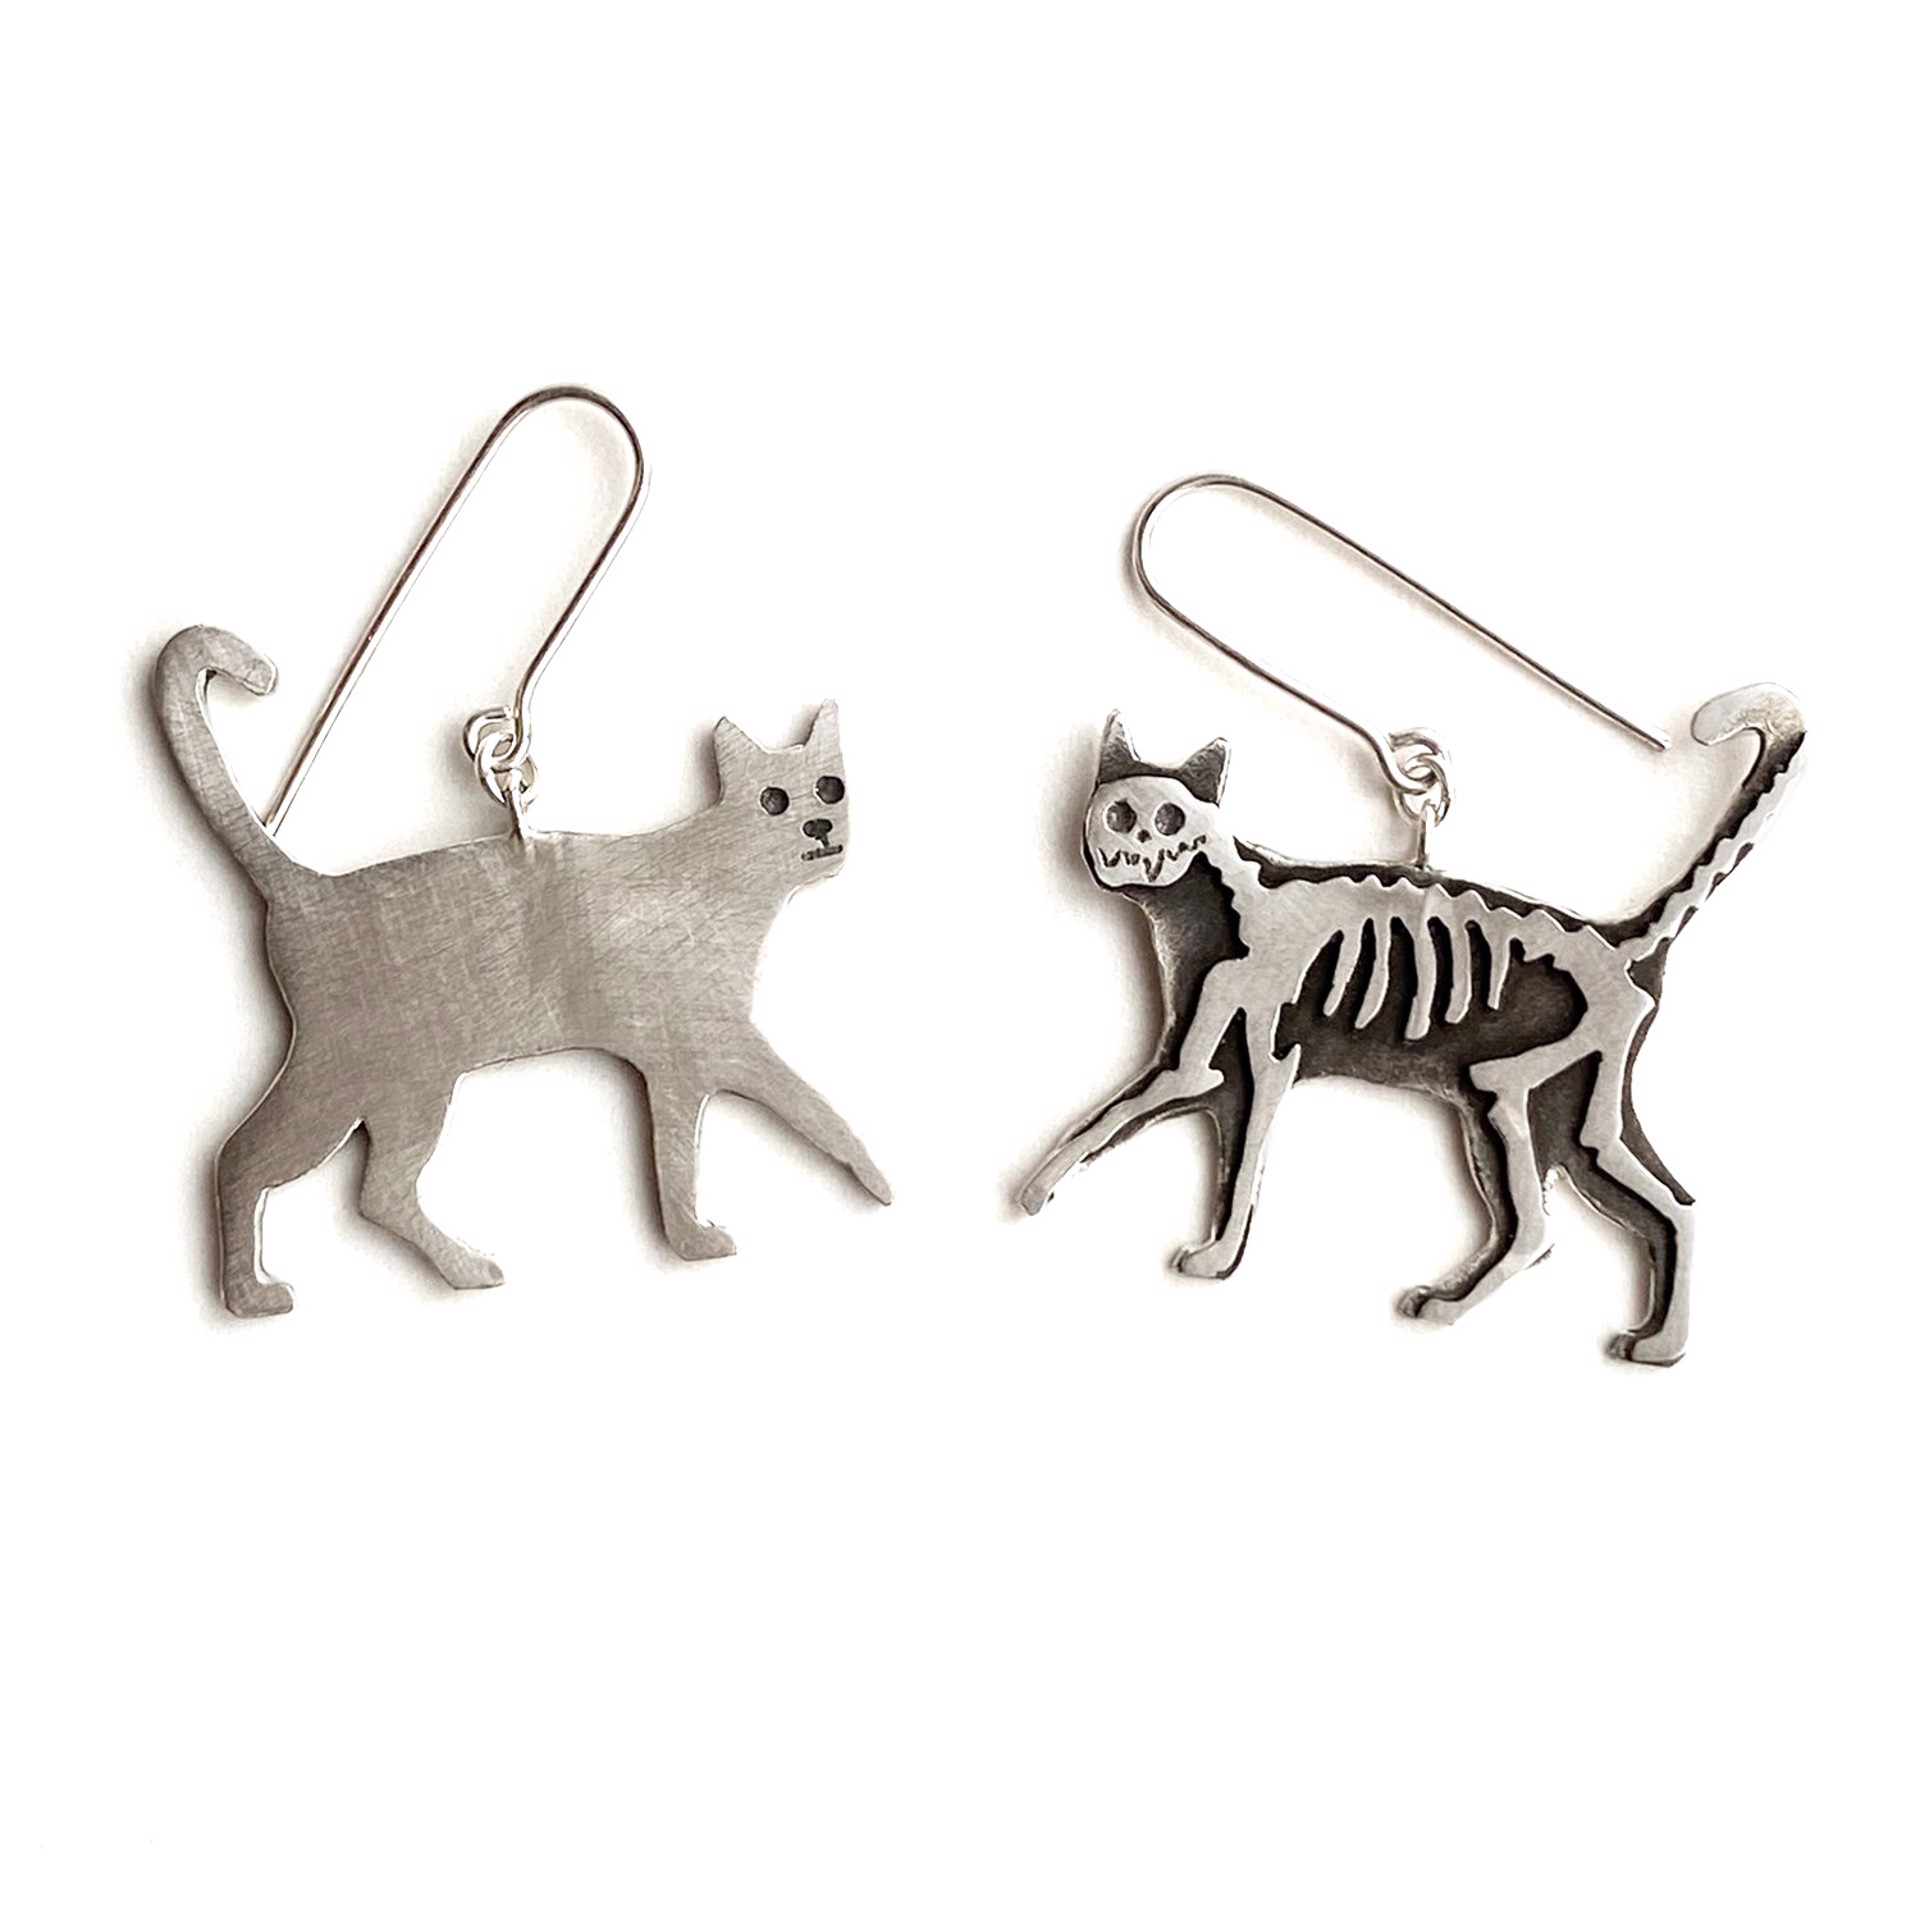 Double sided kitty earrings by Susan Elnora